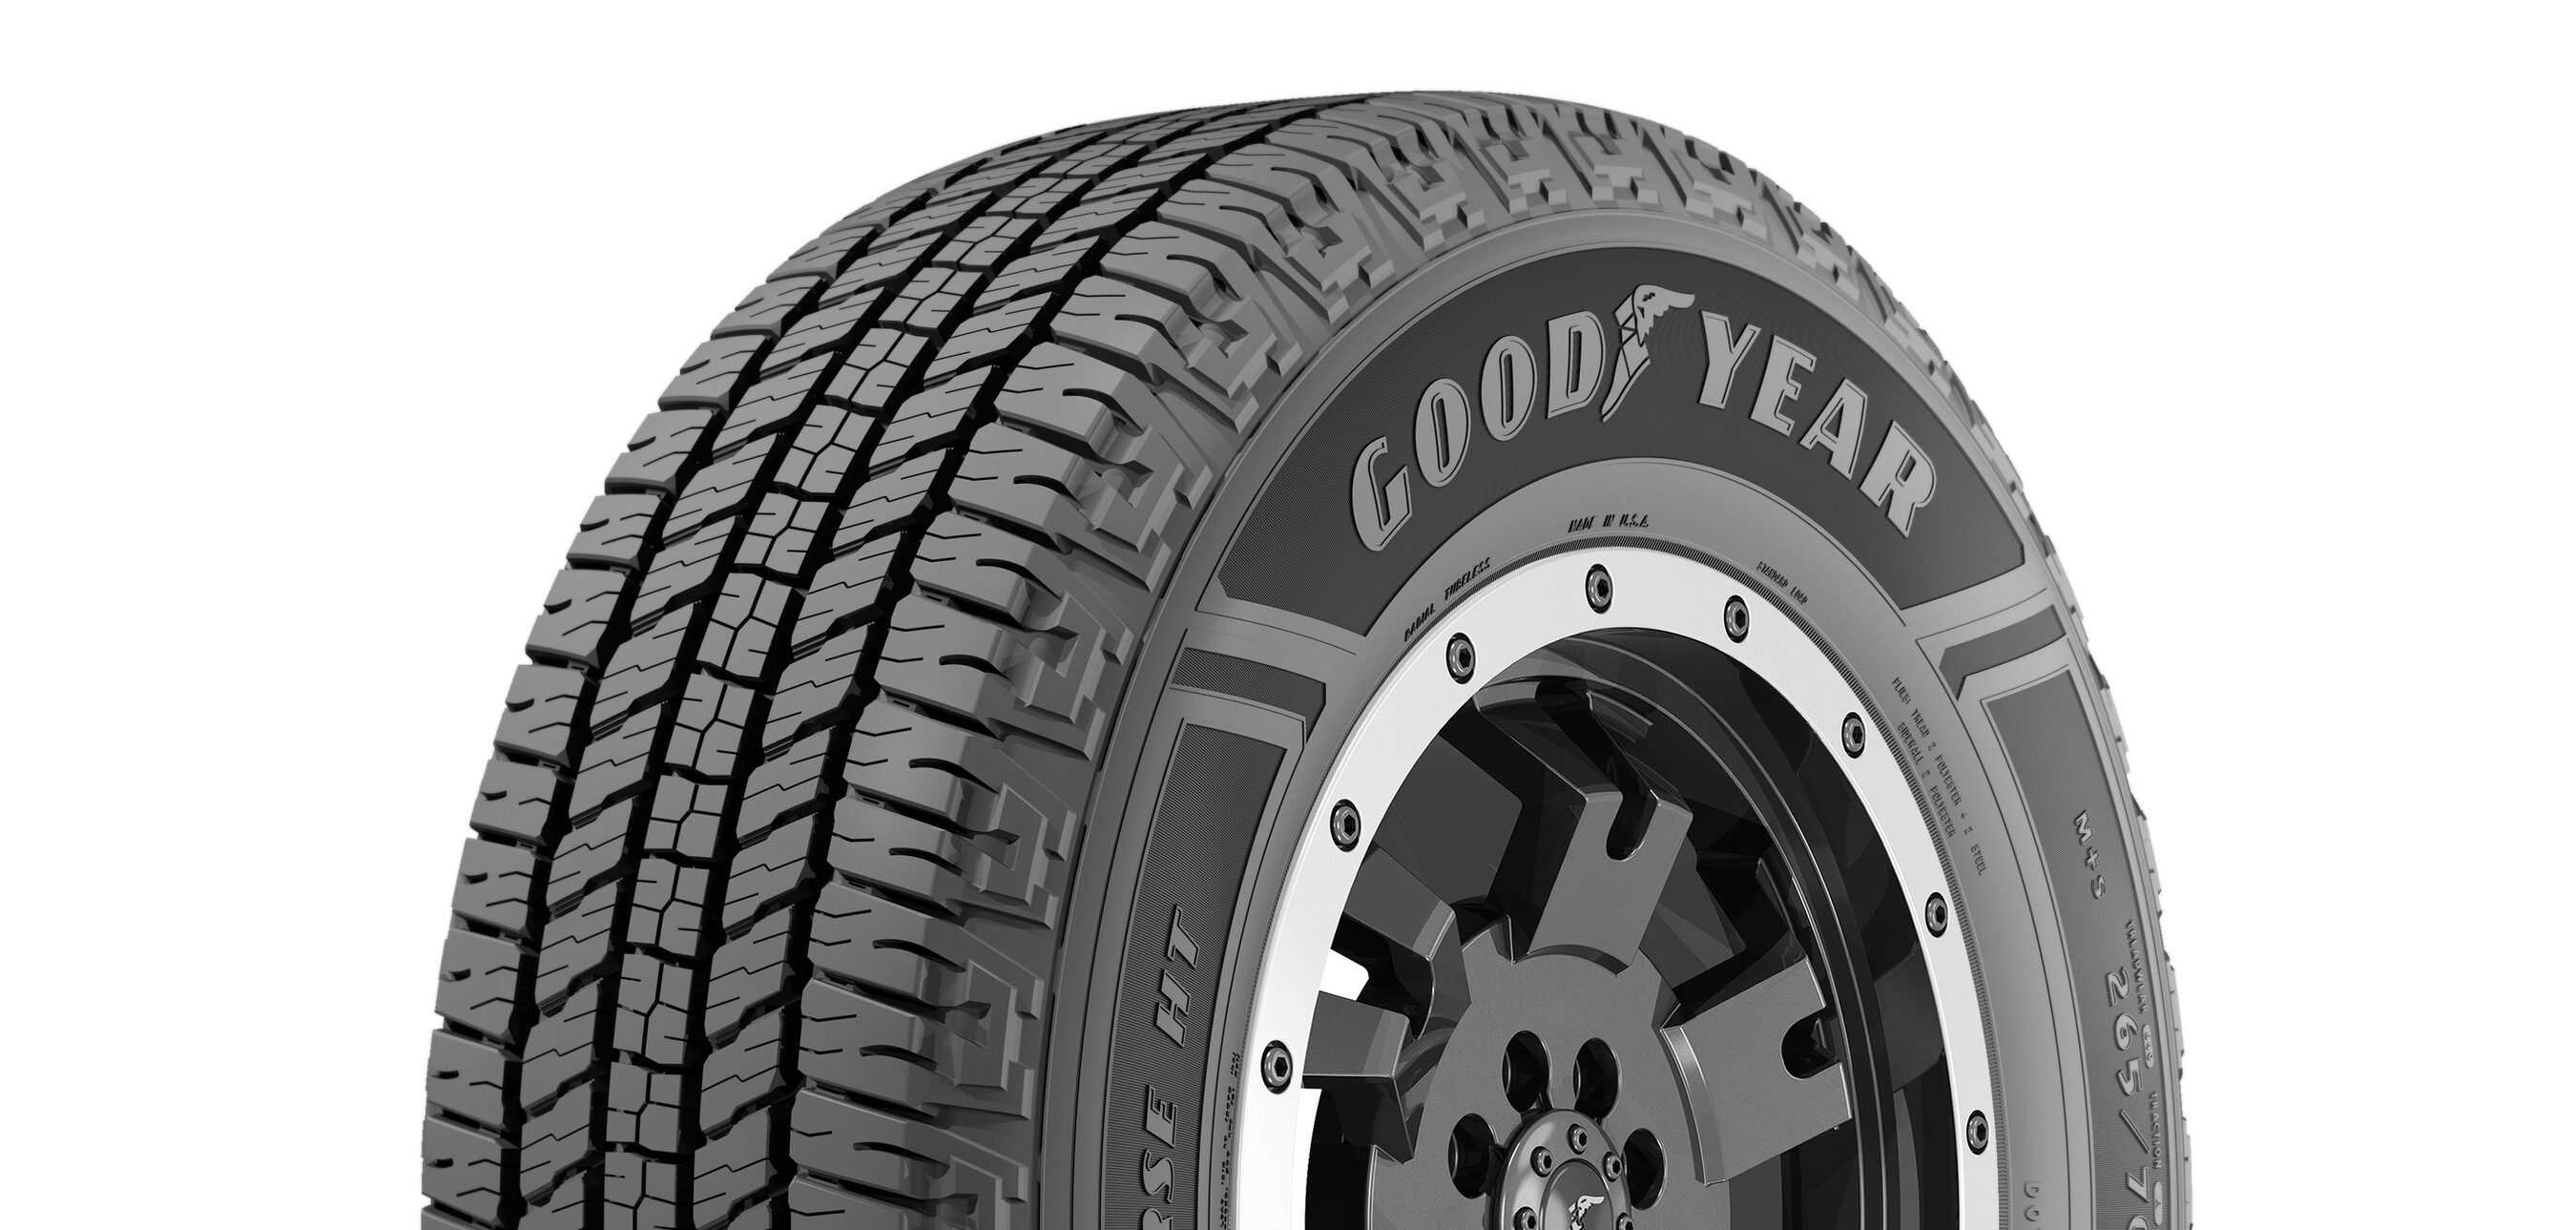 Goodyear launches Wrangler Workhorse HT | Tire Technology International